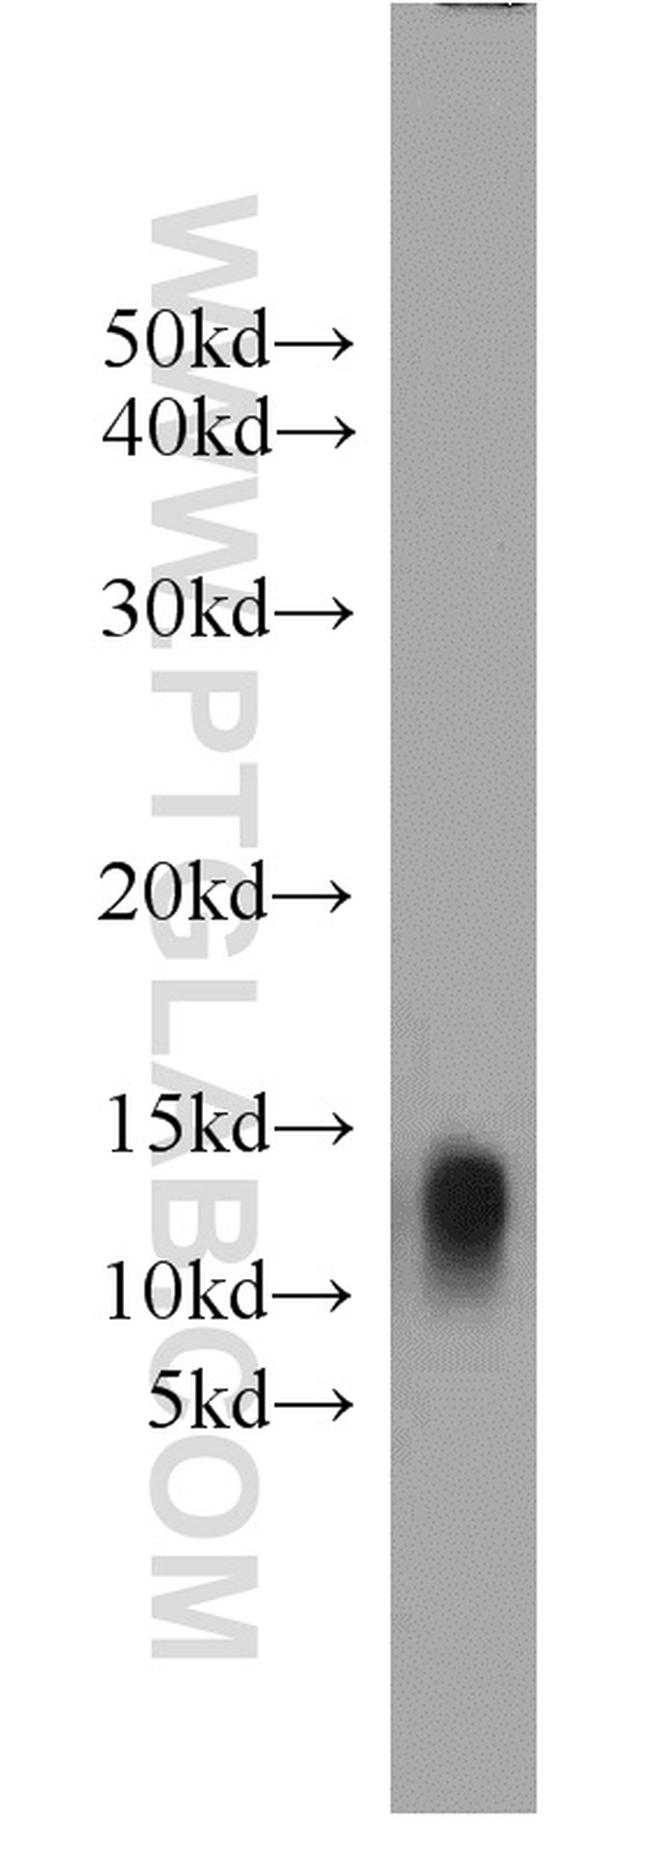 YPEL3 Antibody in Western Blot (WB)